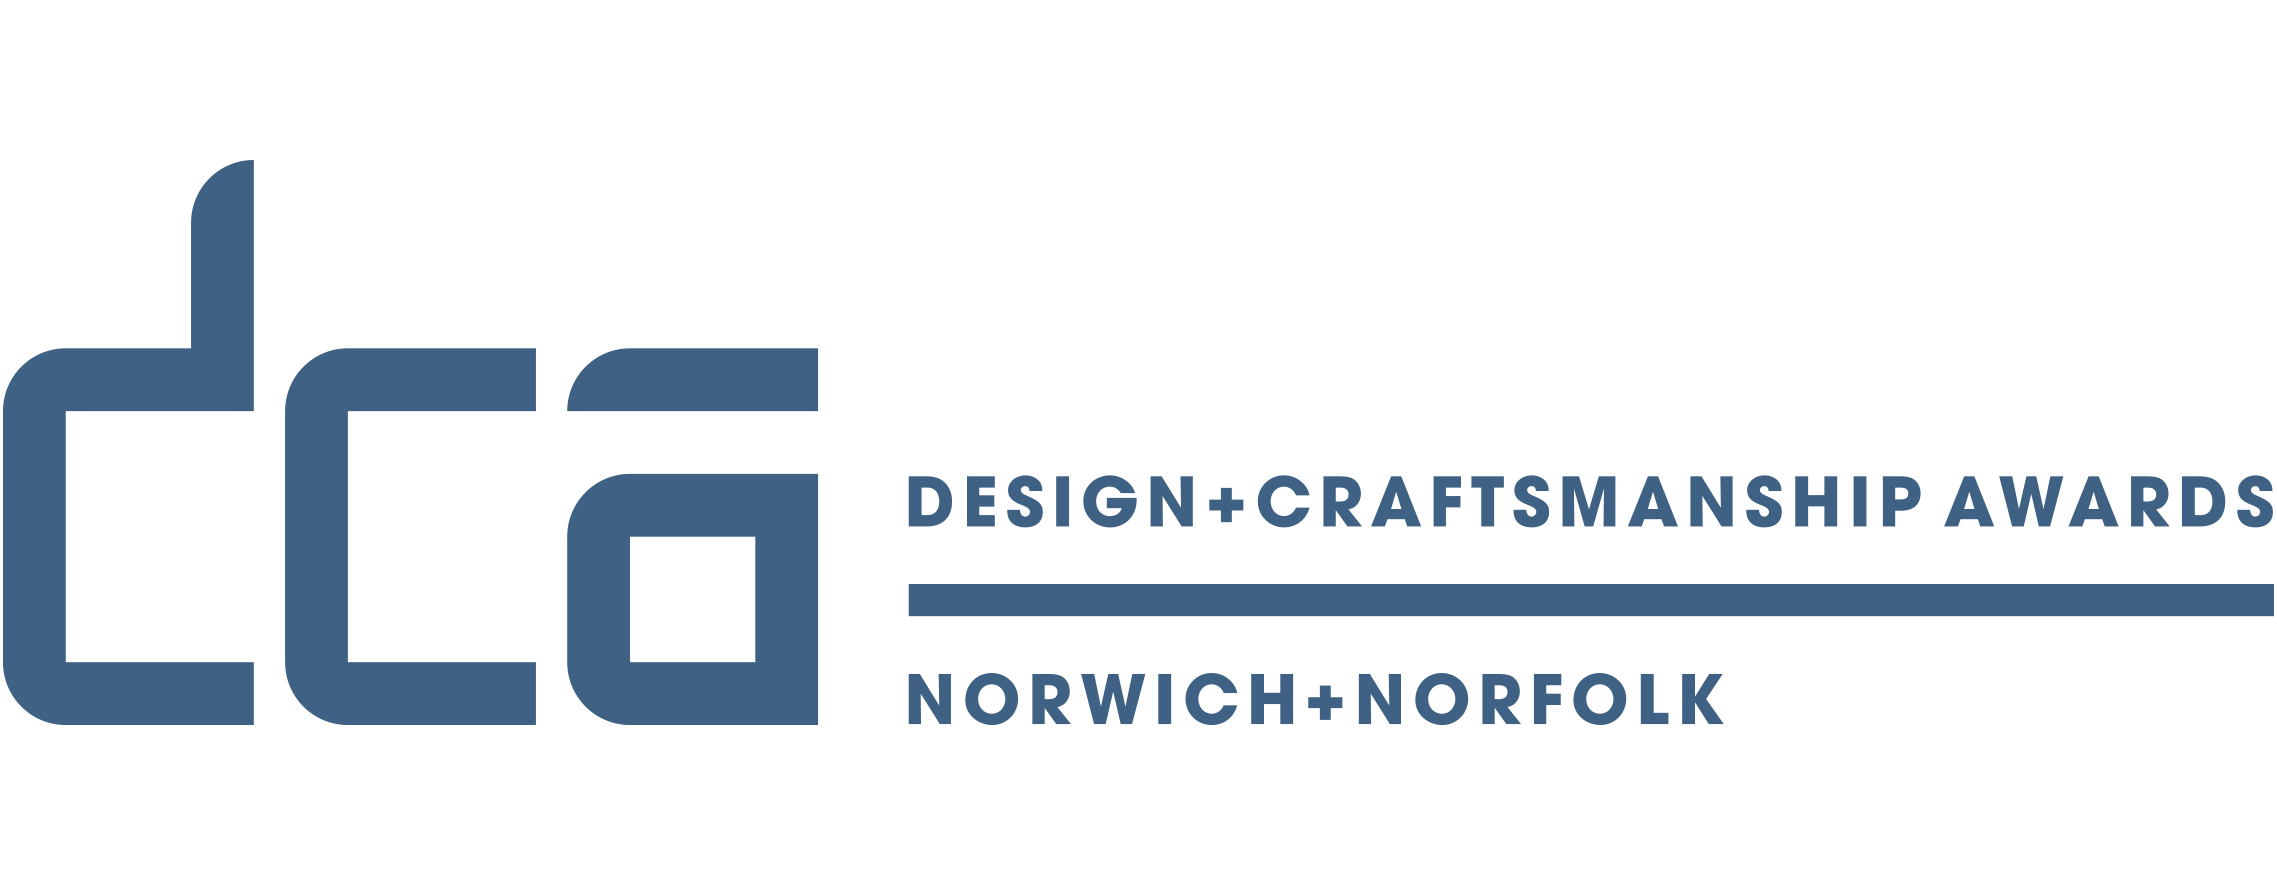 The Design & Craftsmanship Awards